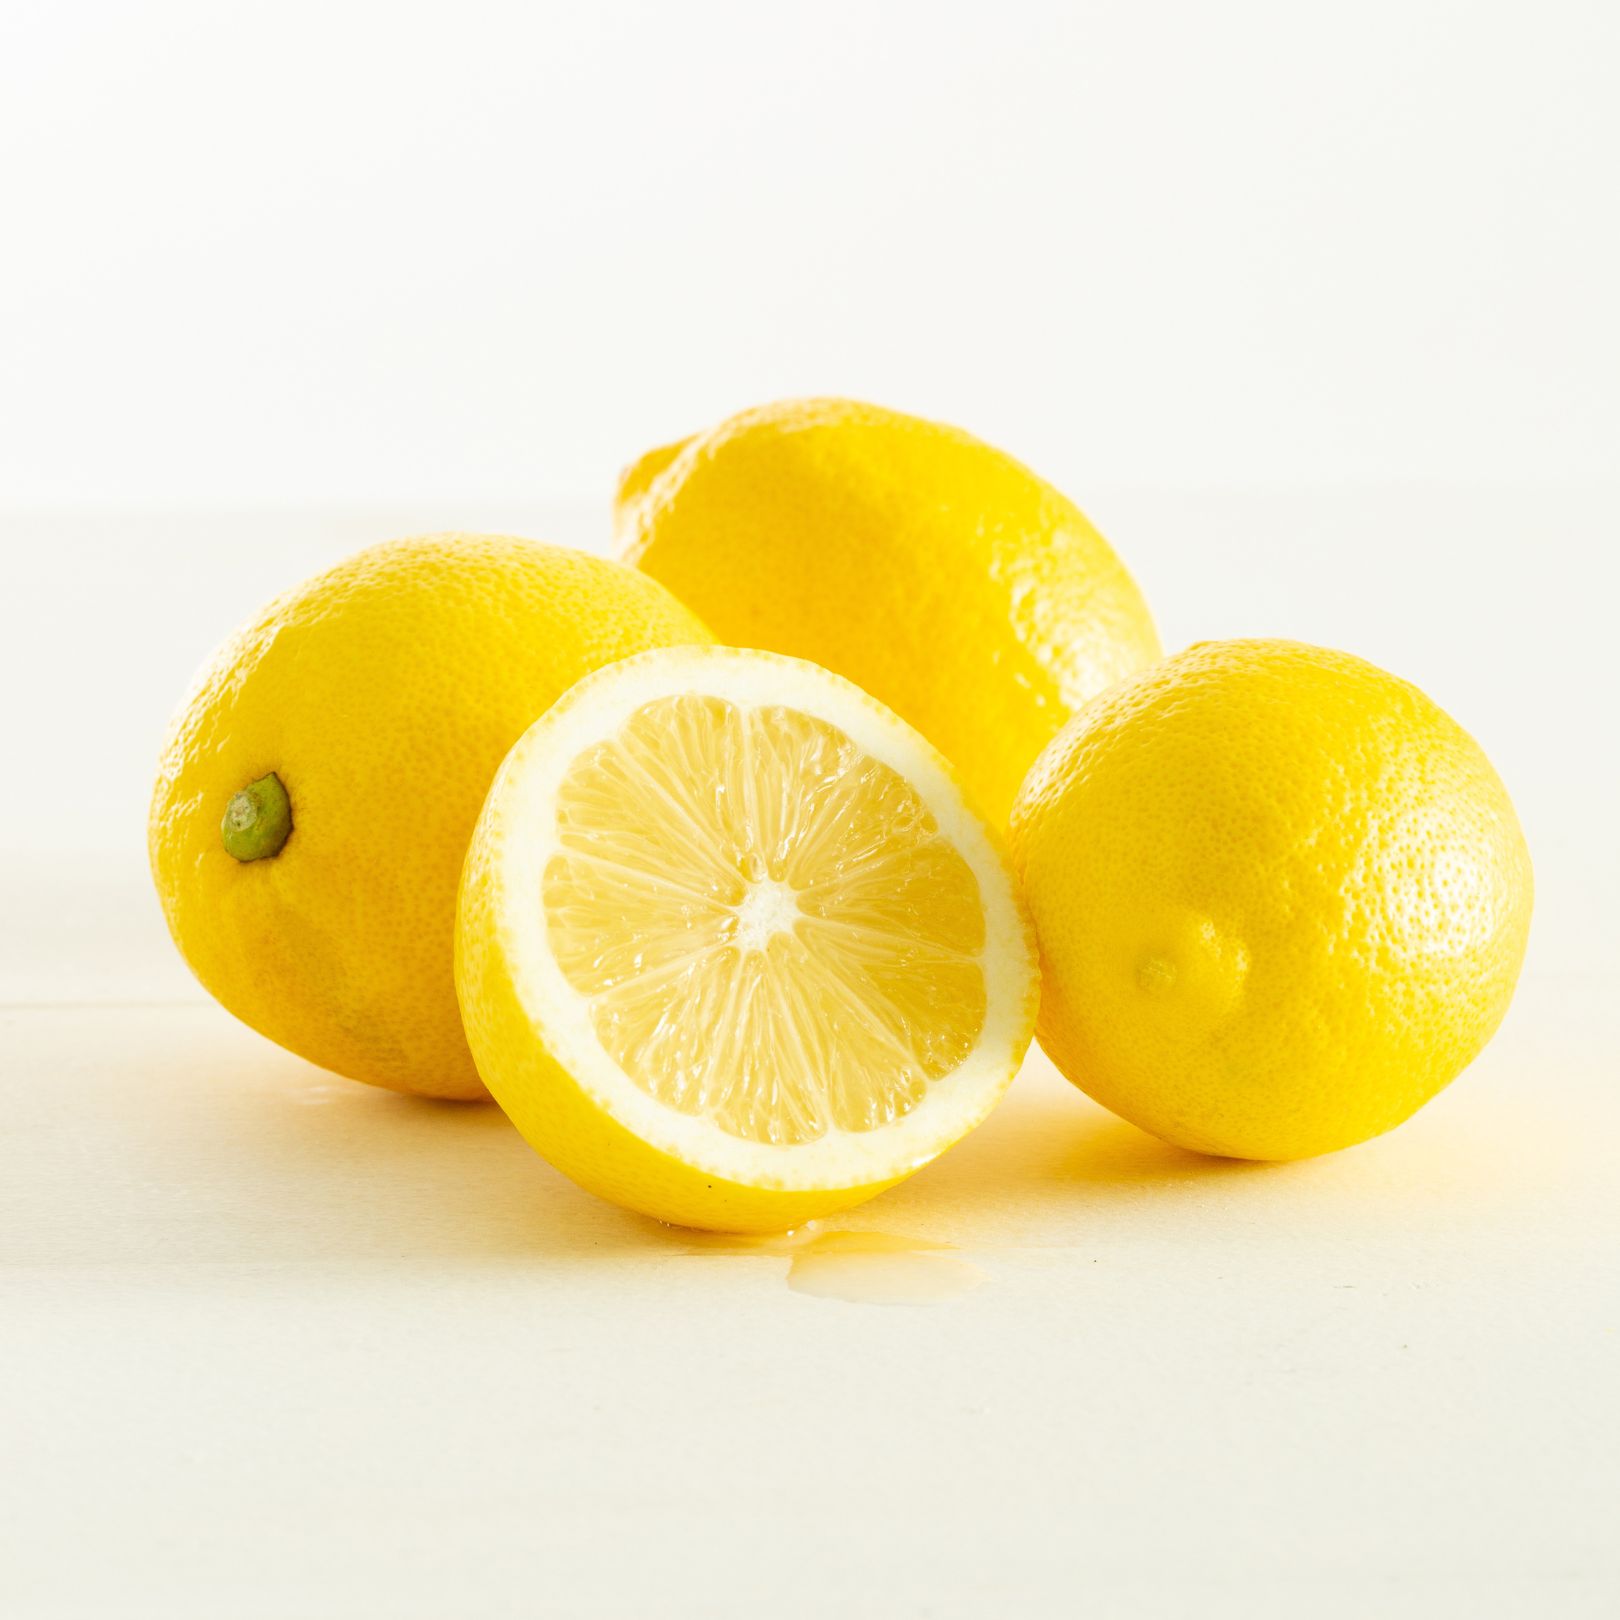 Buy Lemons - Yen Ben Online NZ